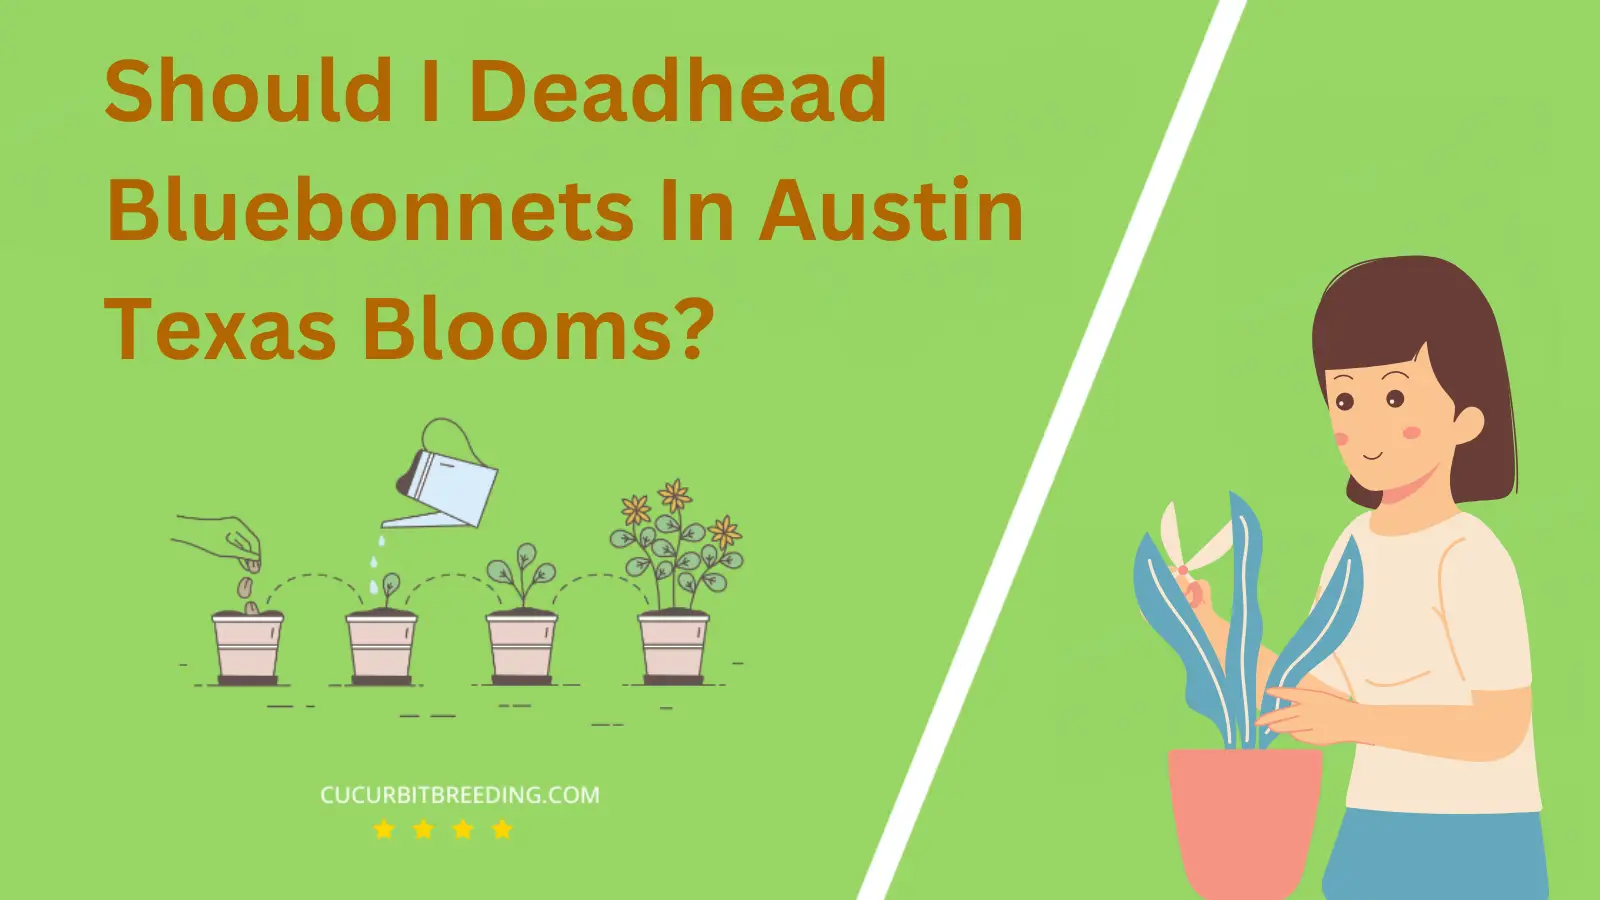 Should I Deadhead Bluebonnets In Austin Texas Blooms?